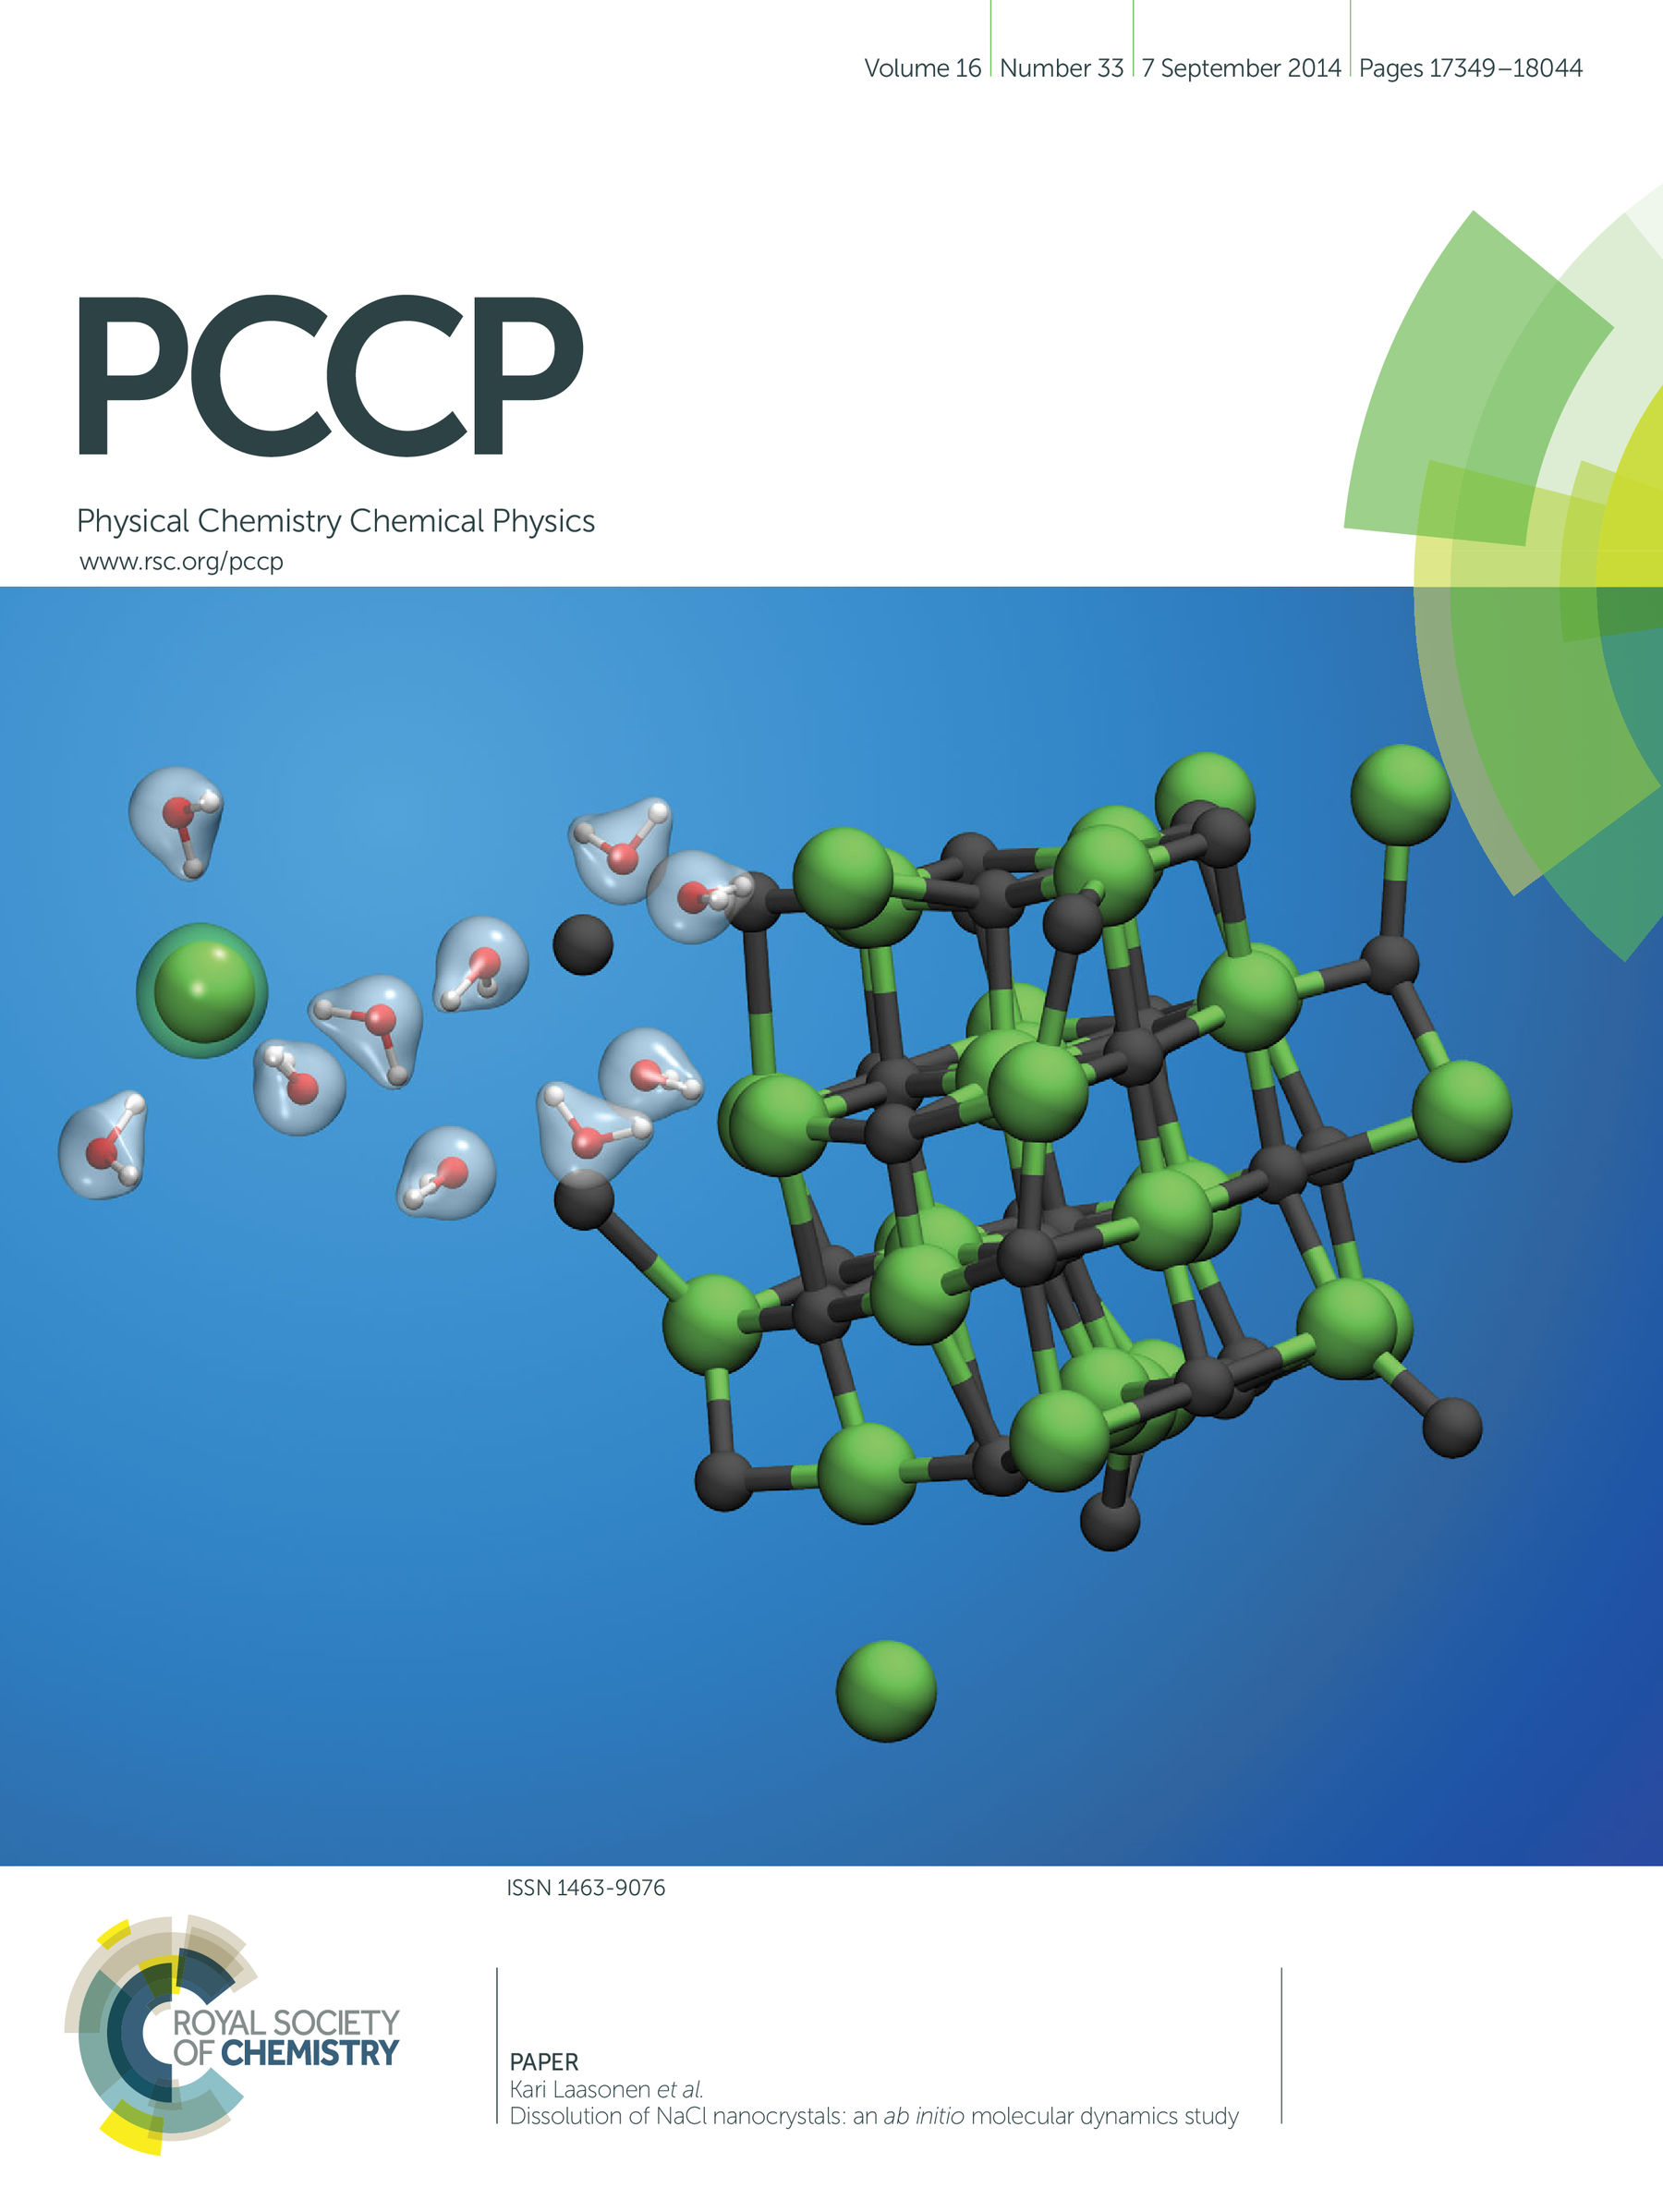 PCCP cover art